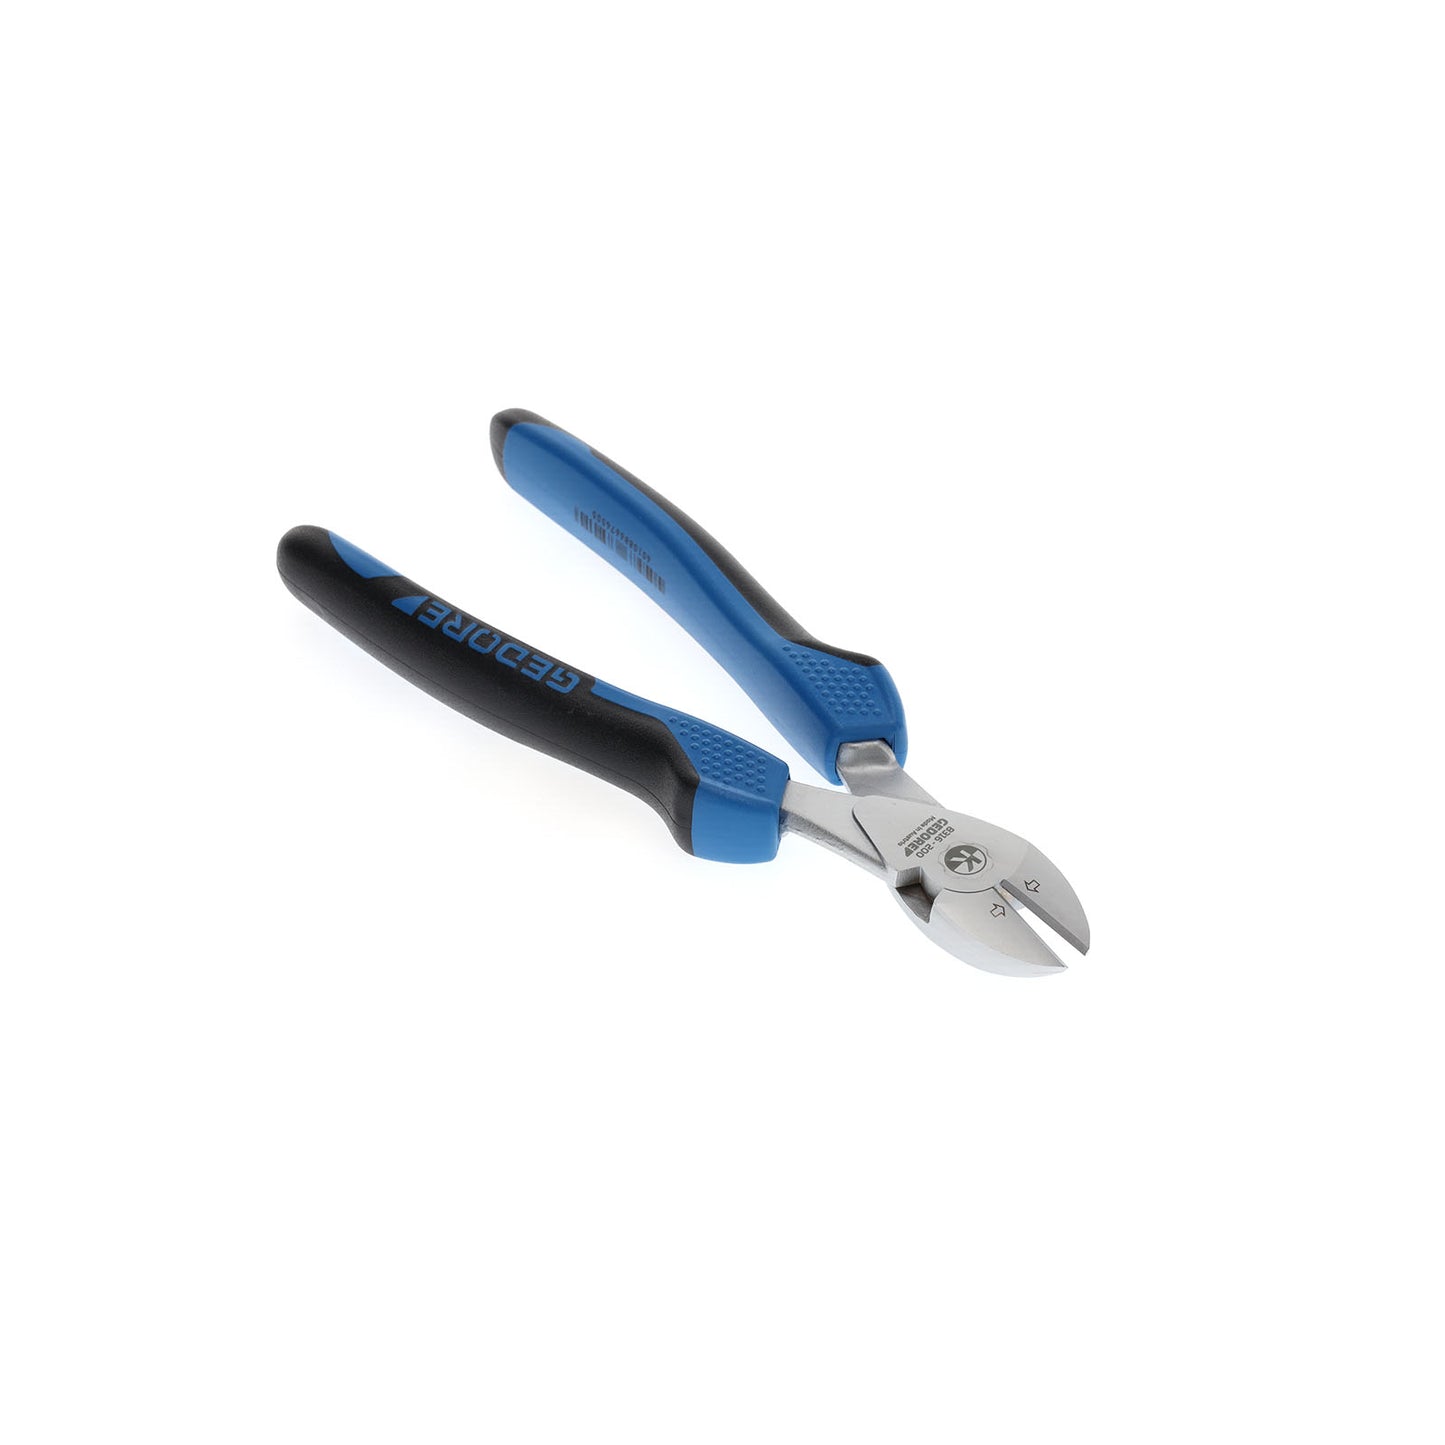 GEDORE 8316-200 JC - Diagonal cutting pliers 200 mm (6745080)